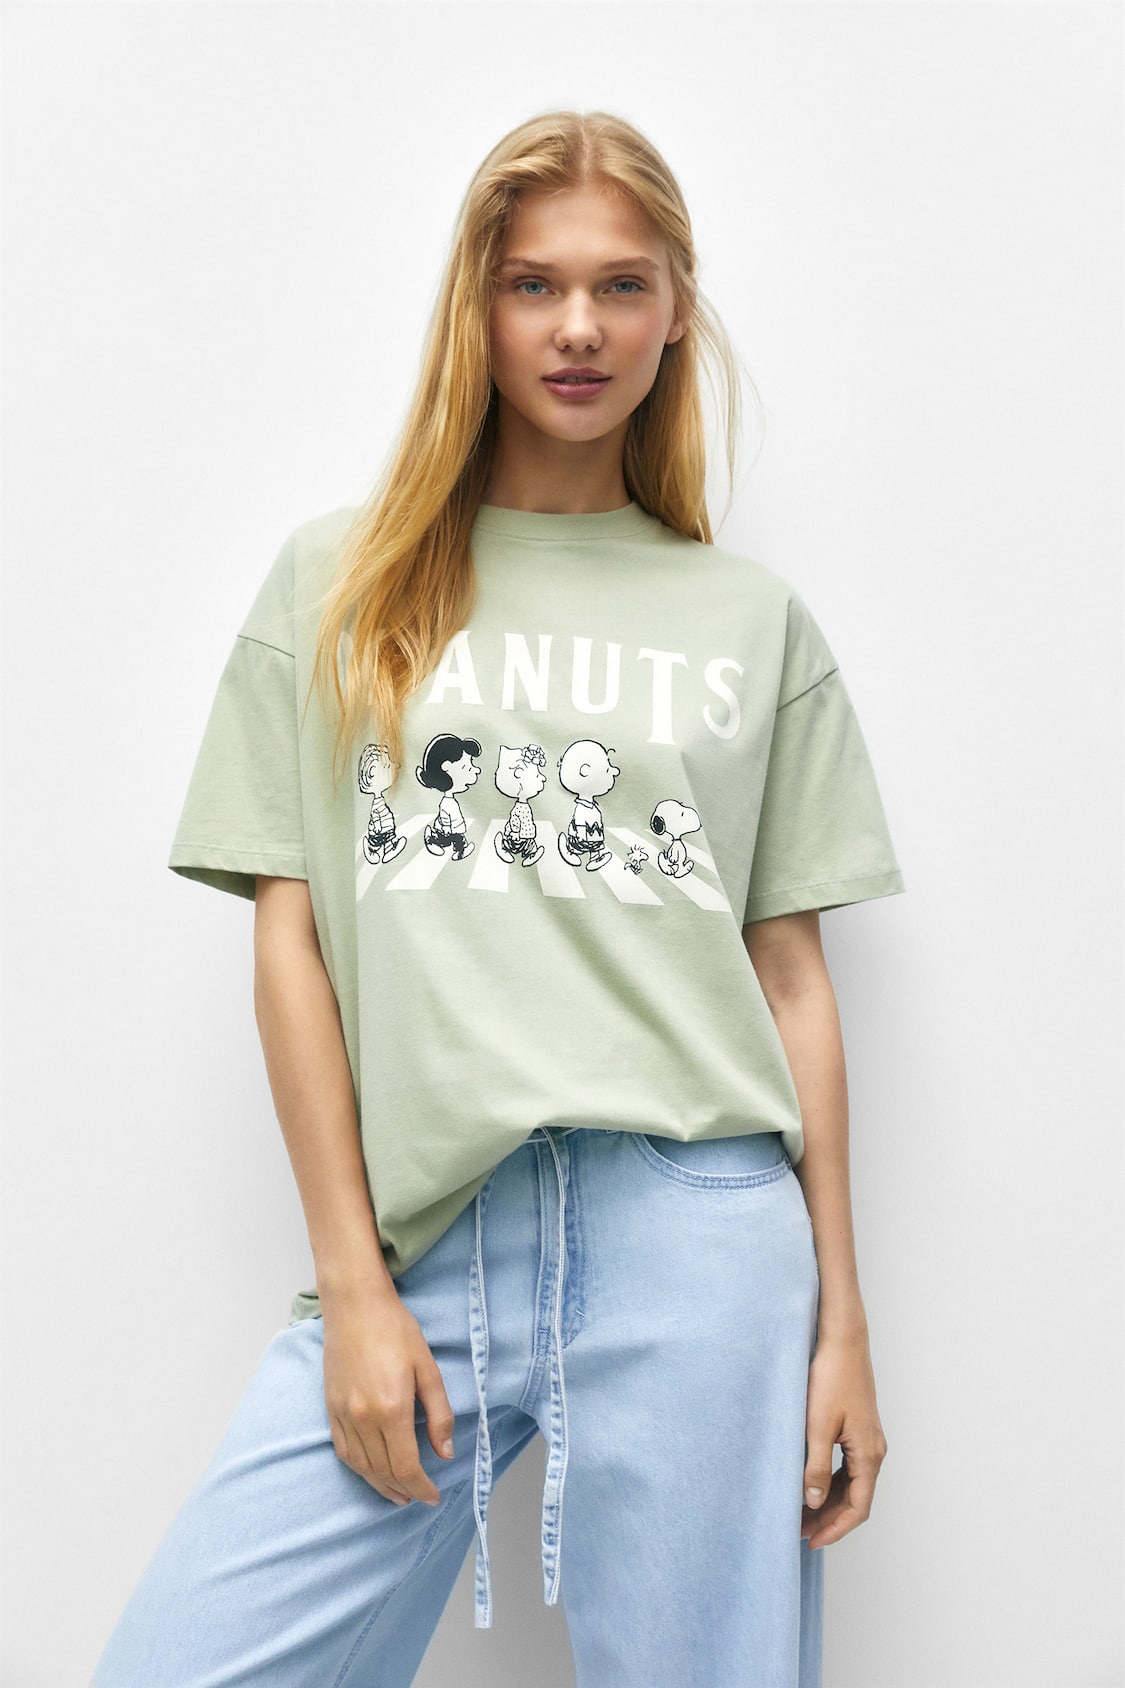 Camiseta corta Peanuts -